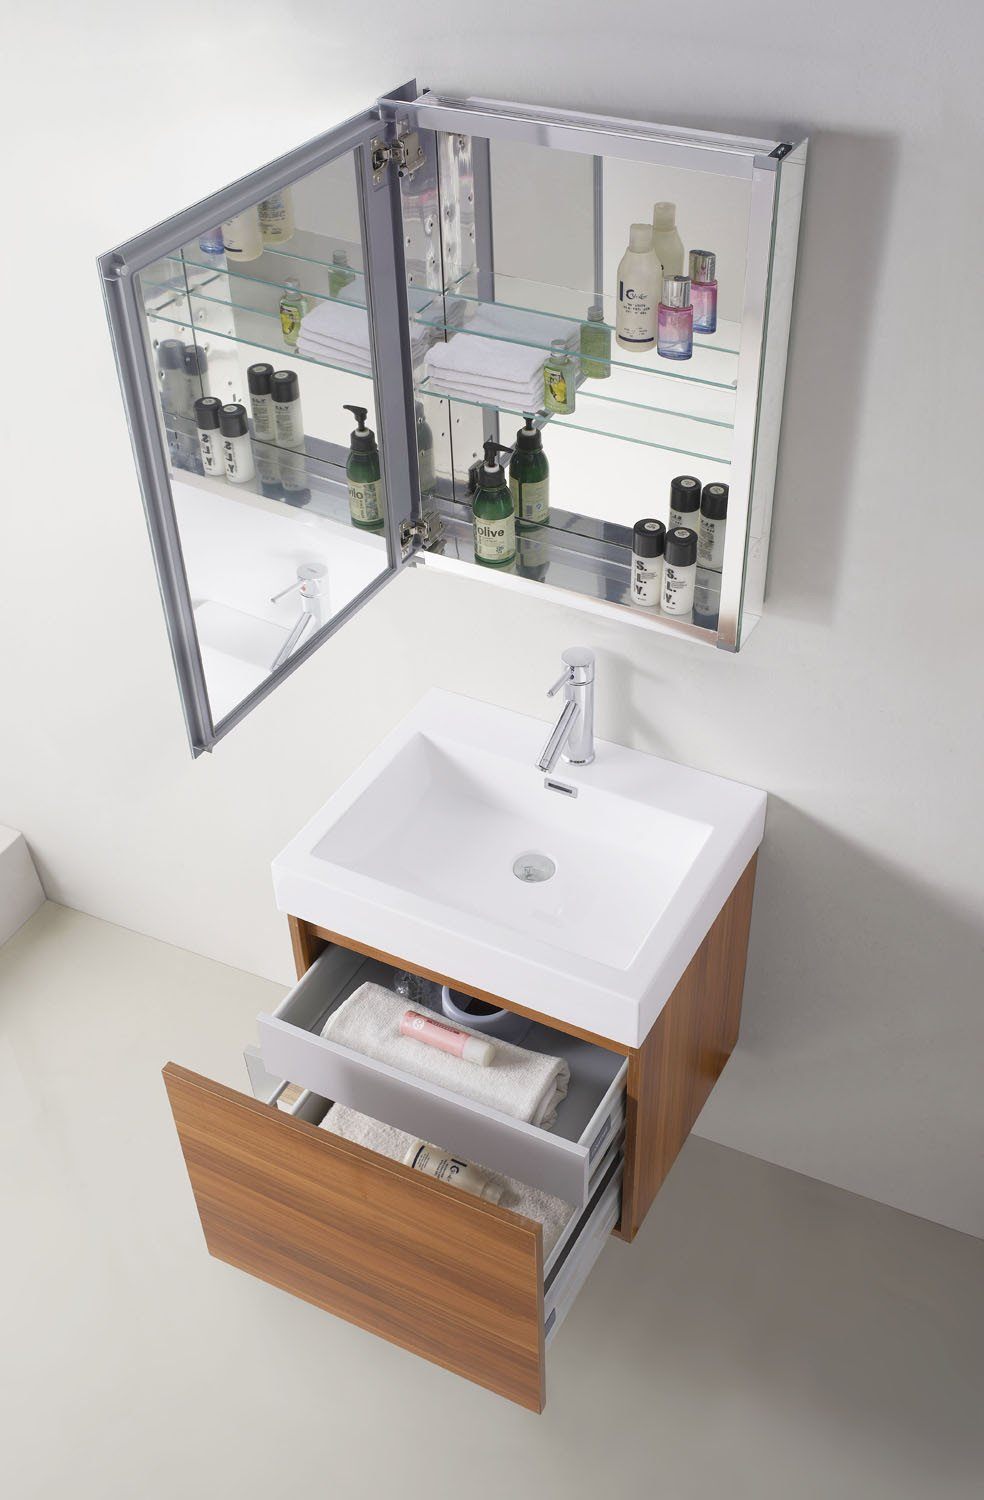 Virtu USA Zuri 24" Single Square Sink Plum Top Vanity in Plum with Polished Chrome Faucet and Mirror Vanity Virtu USA 